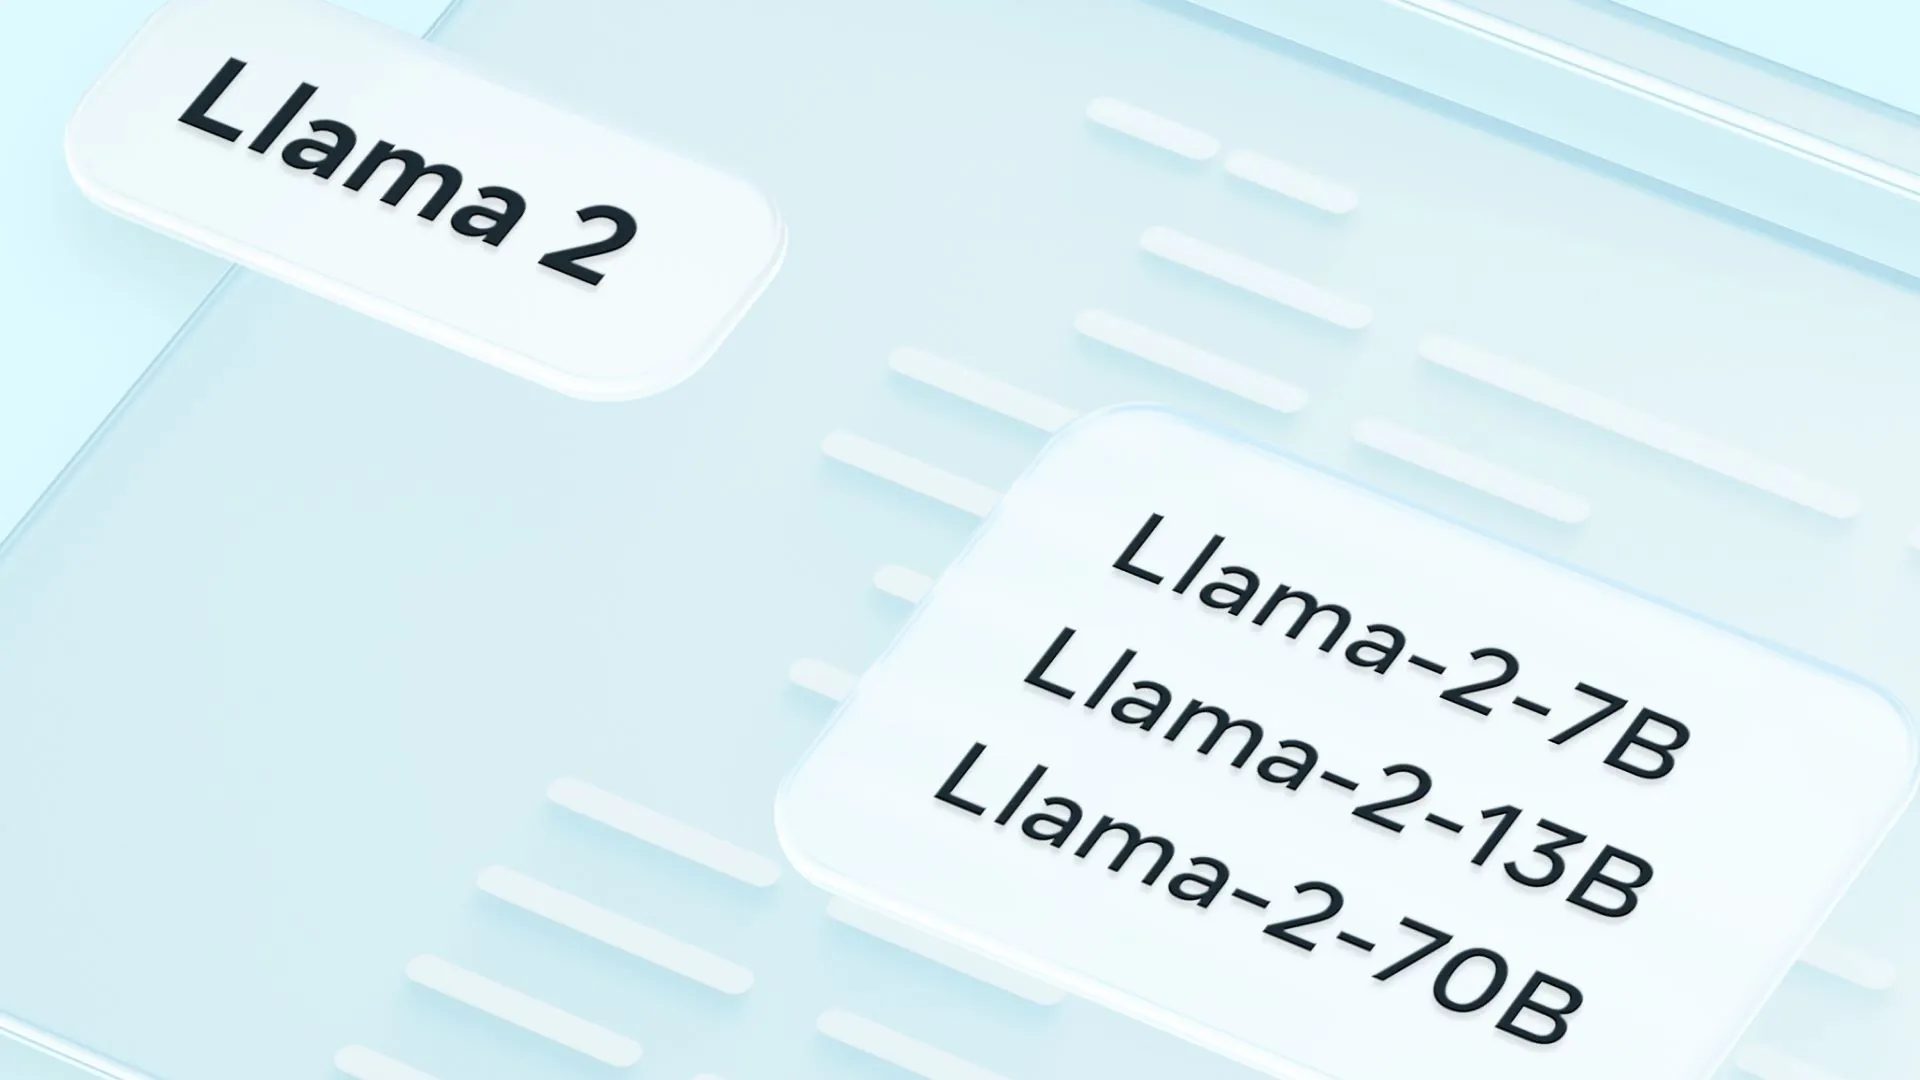 Llama 2 released